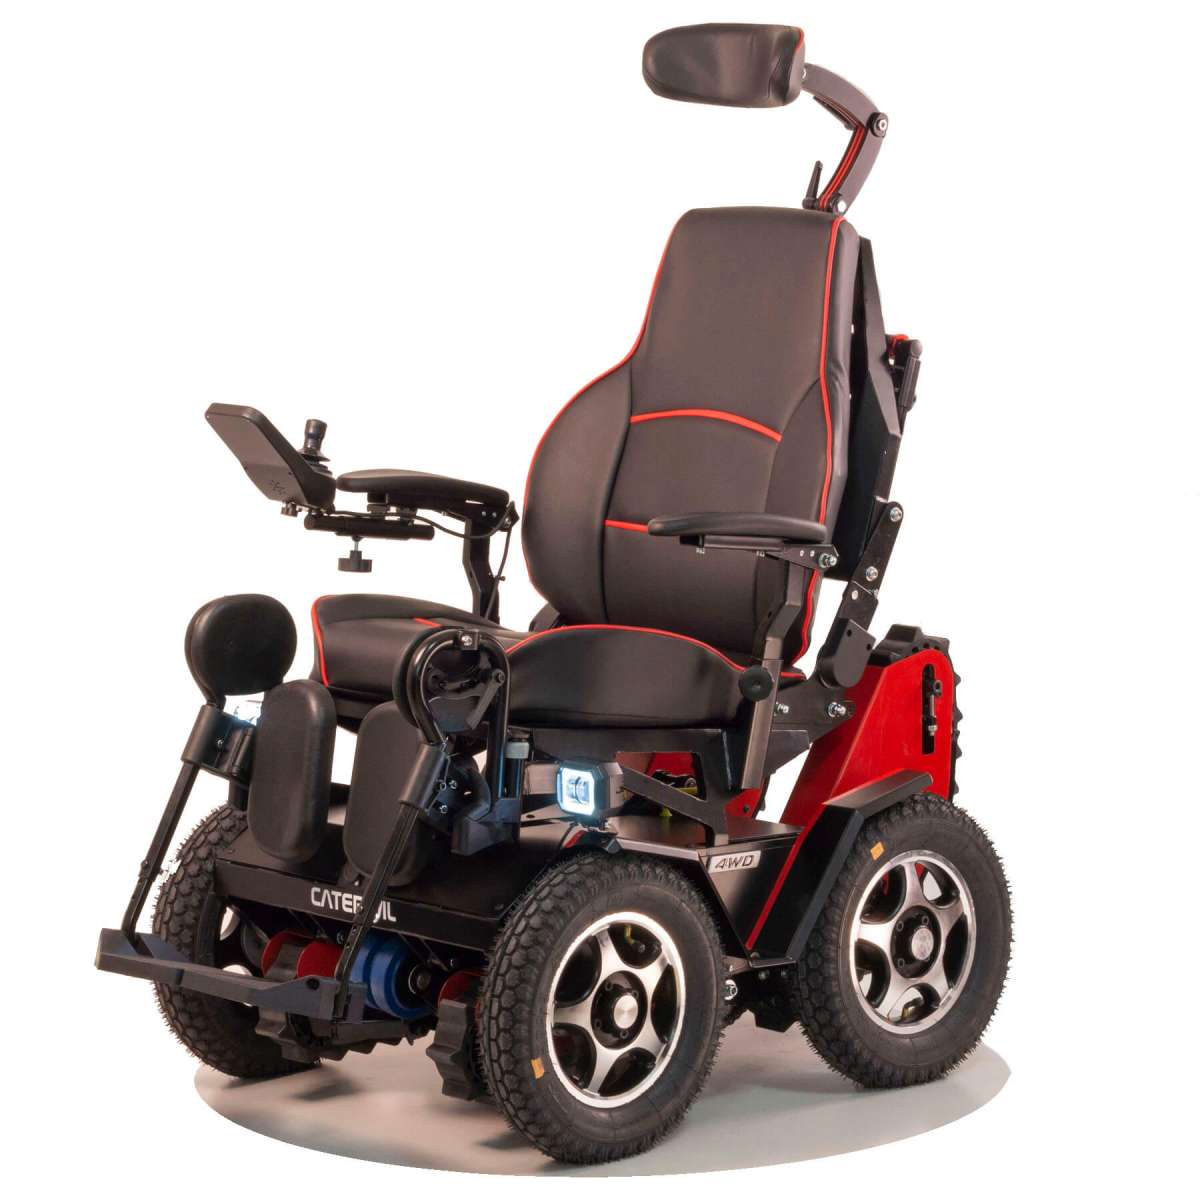 Шагающее кресло. CATERWIL GTS 4wd коляска. Коляска ступенькоход CATERWIL GTS 4wd. Инвалидное кресло-коляска вездеход ступенькоход CATERWIL GTS 4wd Lux. КАТЕРВИЛ коляски вездеходы.